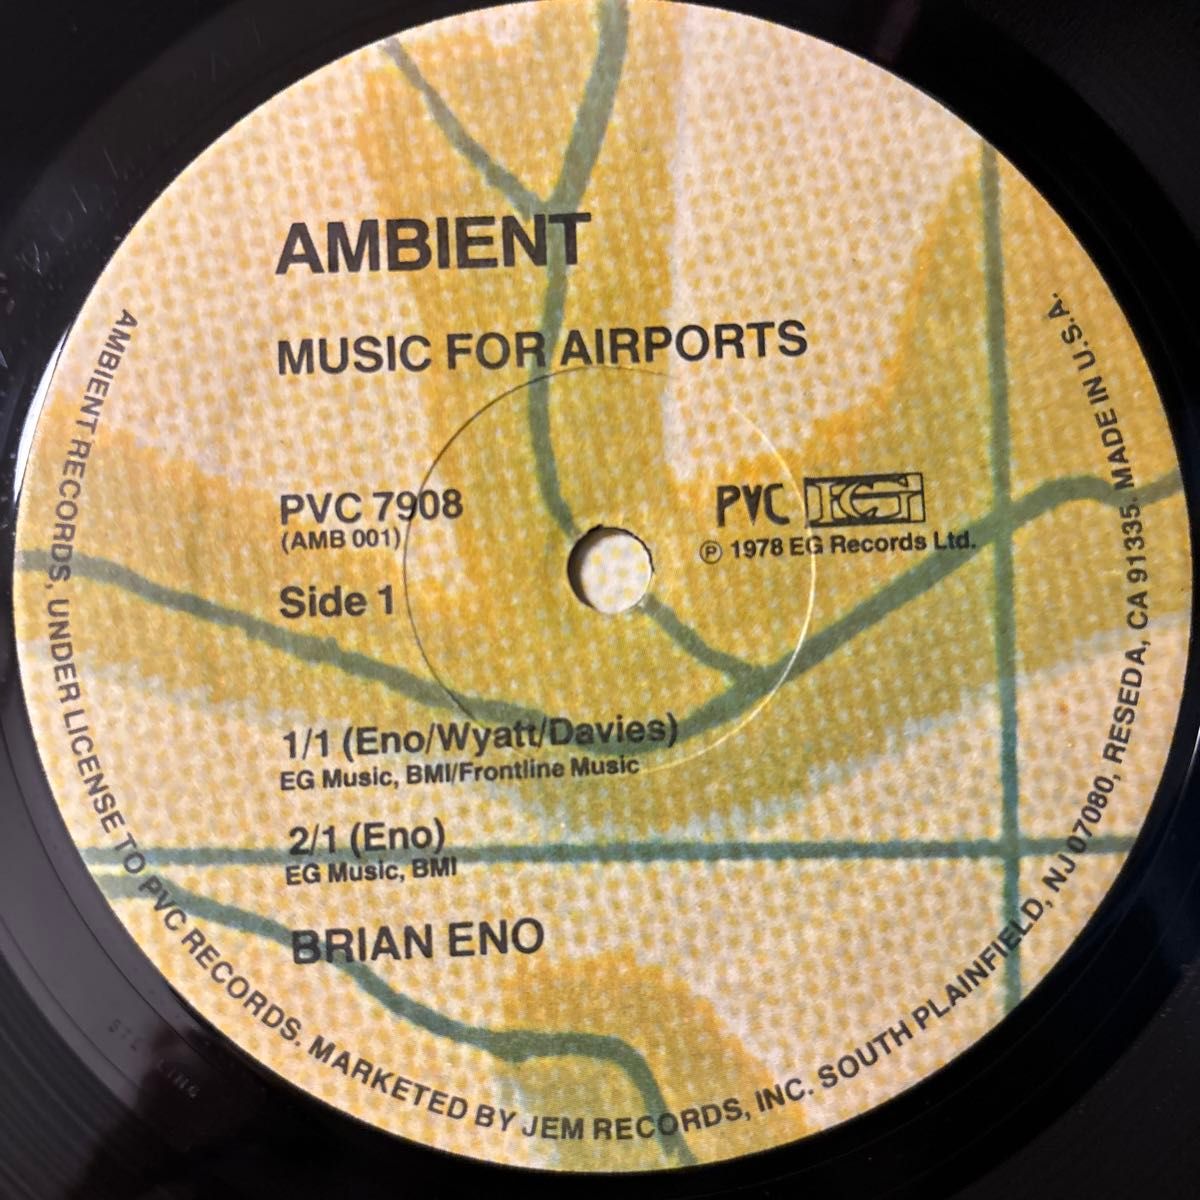 Brian Eno Ambient 1 Music For Airports レコード ブライアン・イーノ アンビエント LP